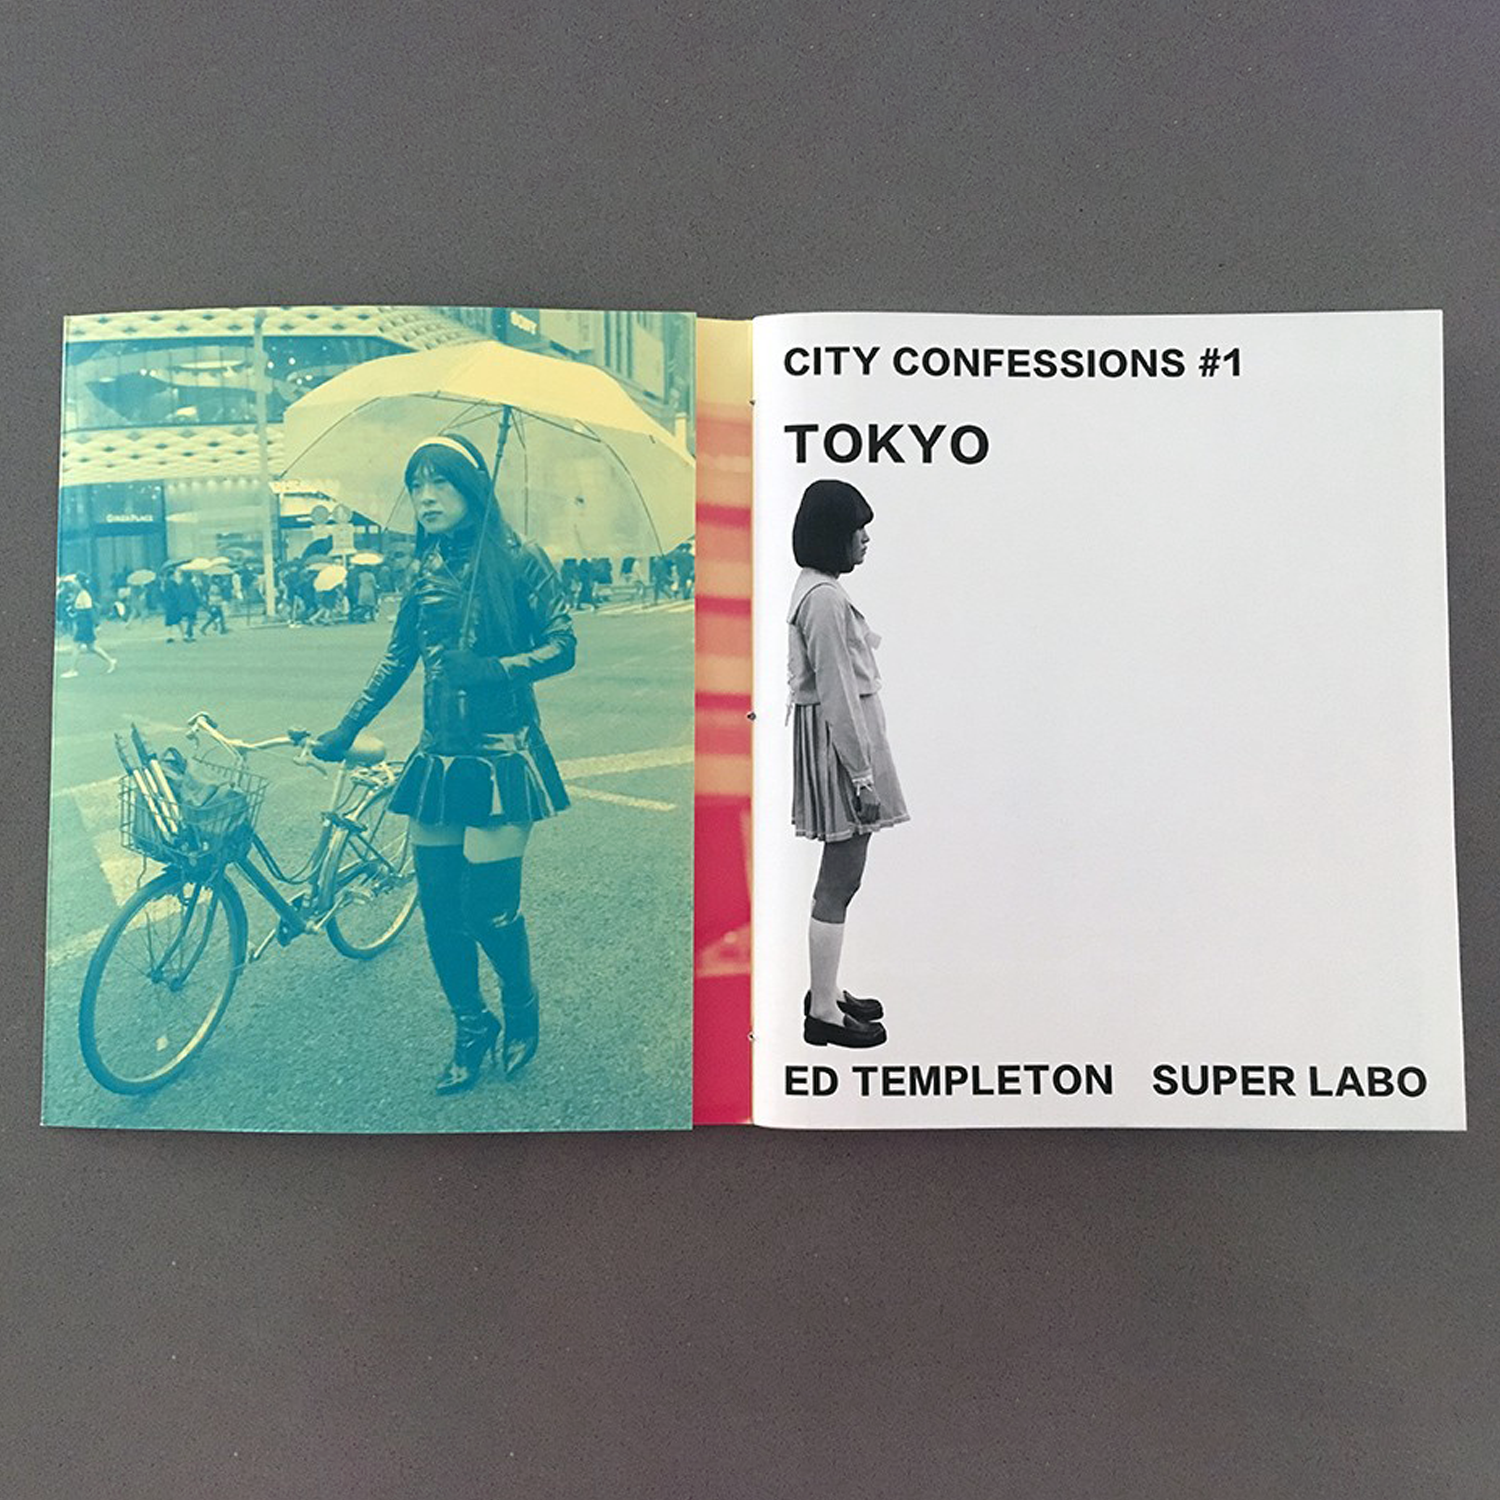 City Confessions #1 Tokyo